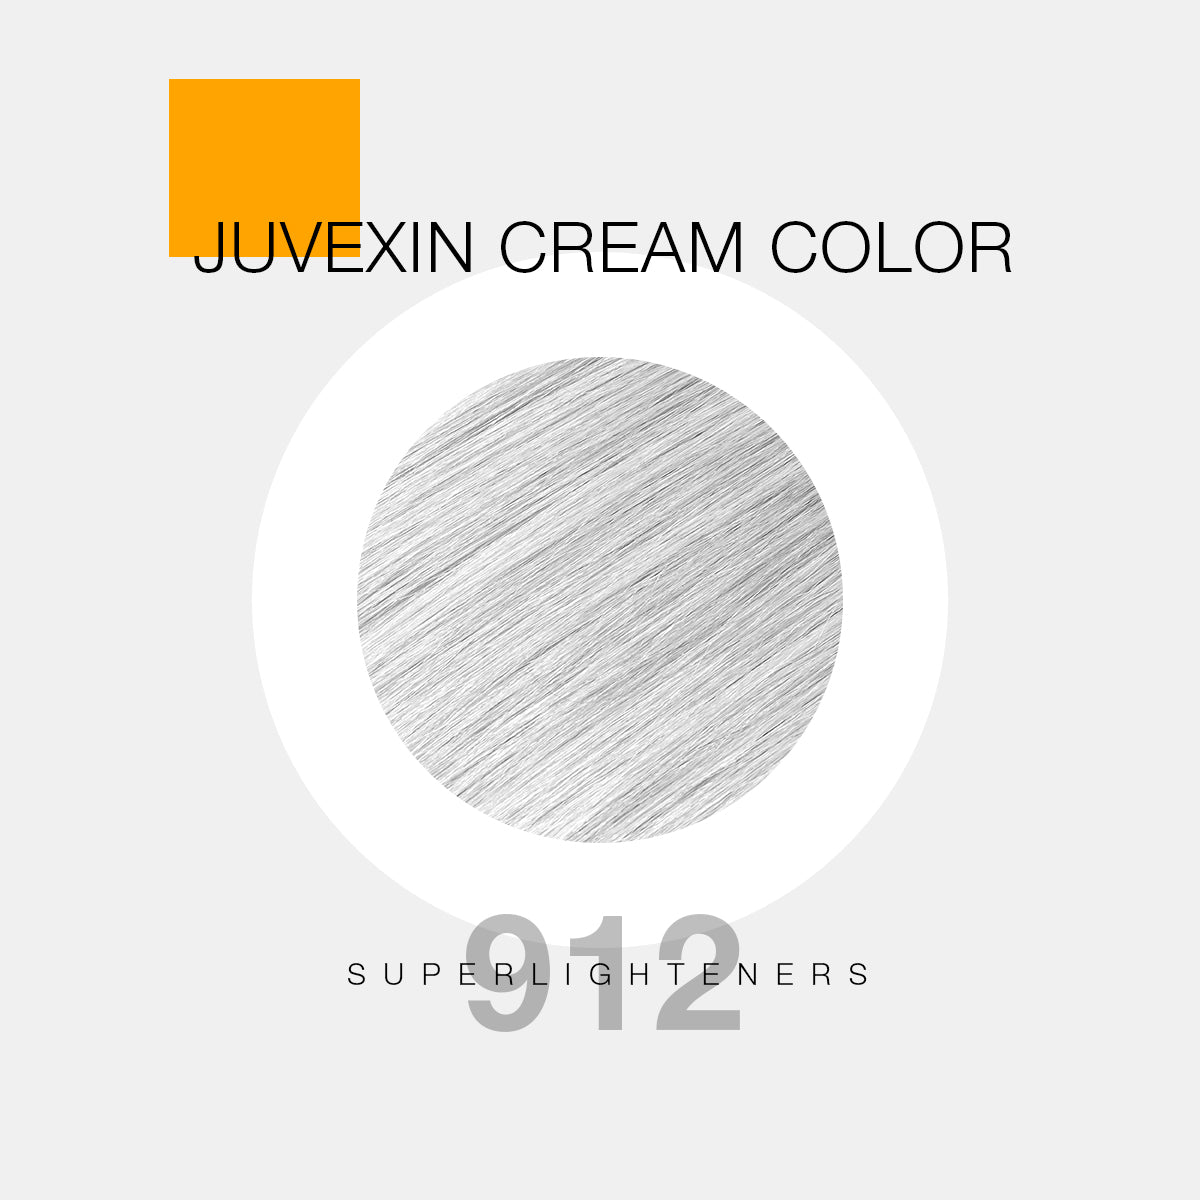 Juvexin Cream Color Pro Superlighteners